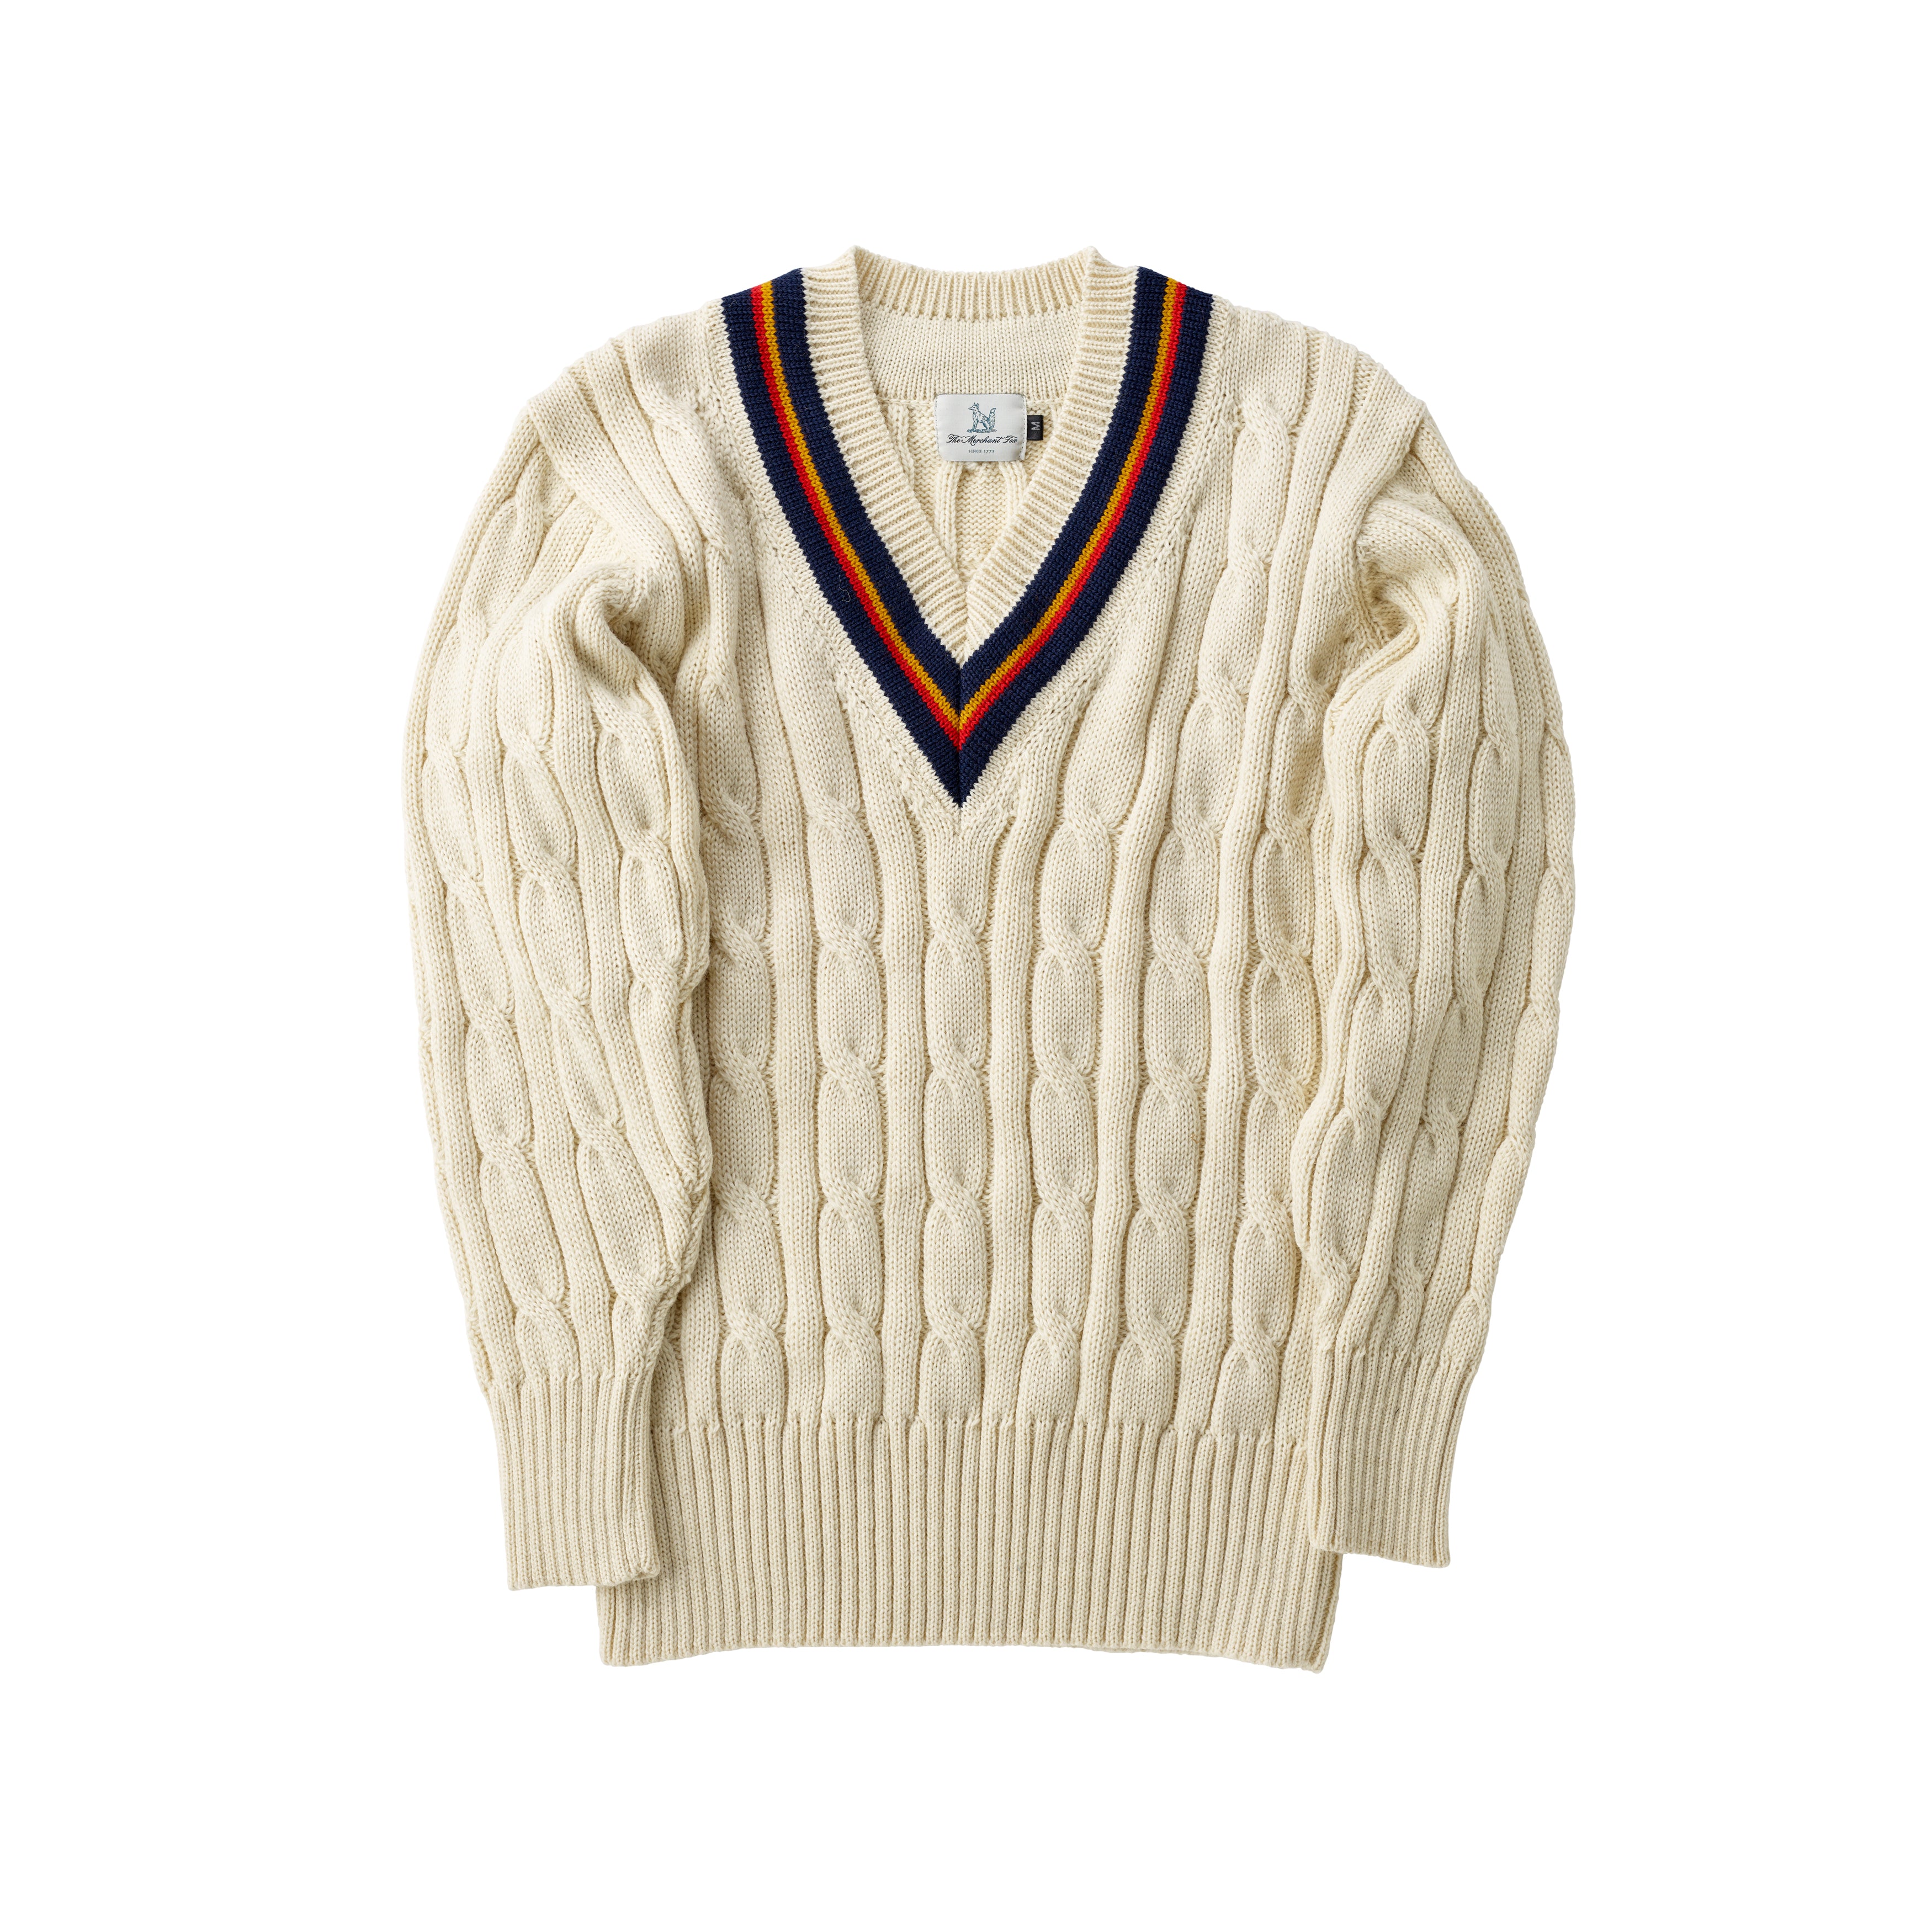 Fox Cricket Club Ecru Sweater with Navy, Sun Yellow & Red Stripes